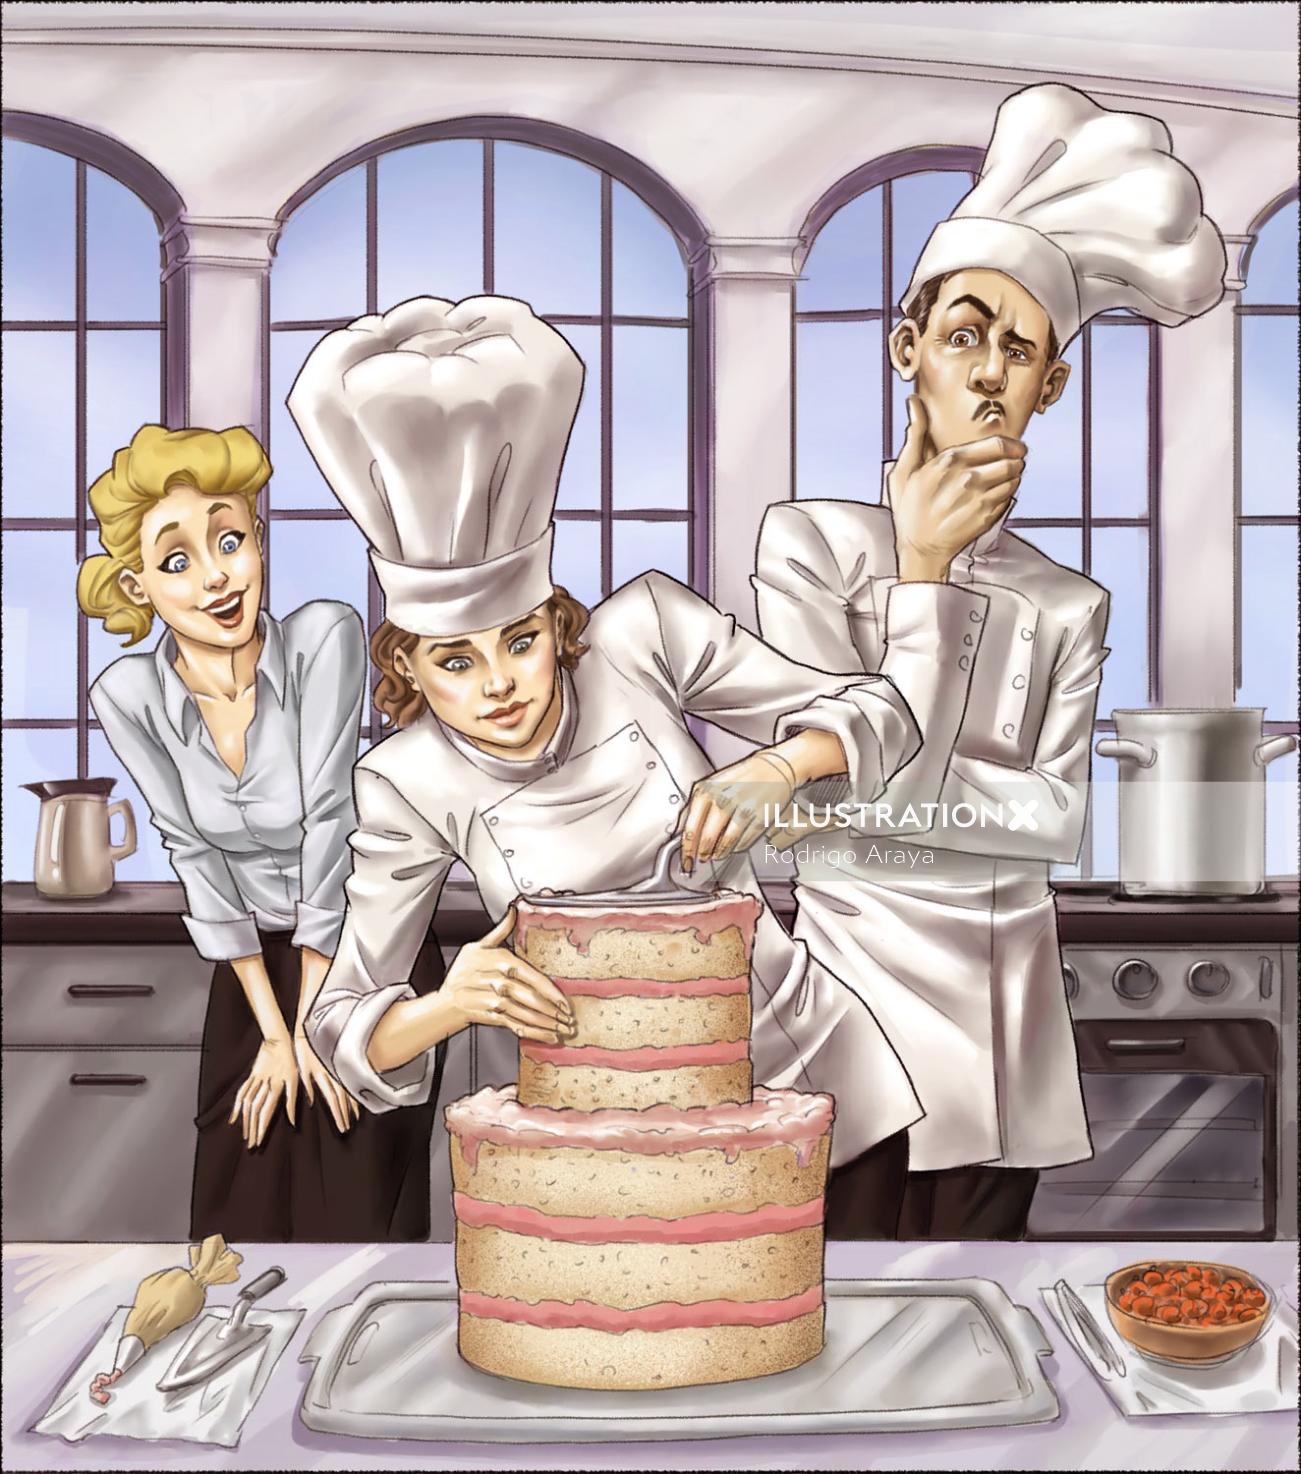 Storyboard do chef preparando bolo